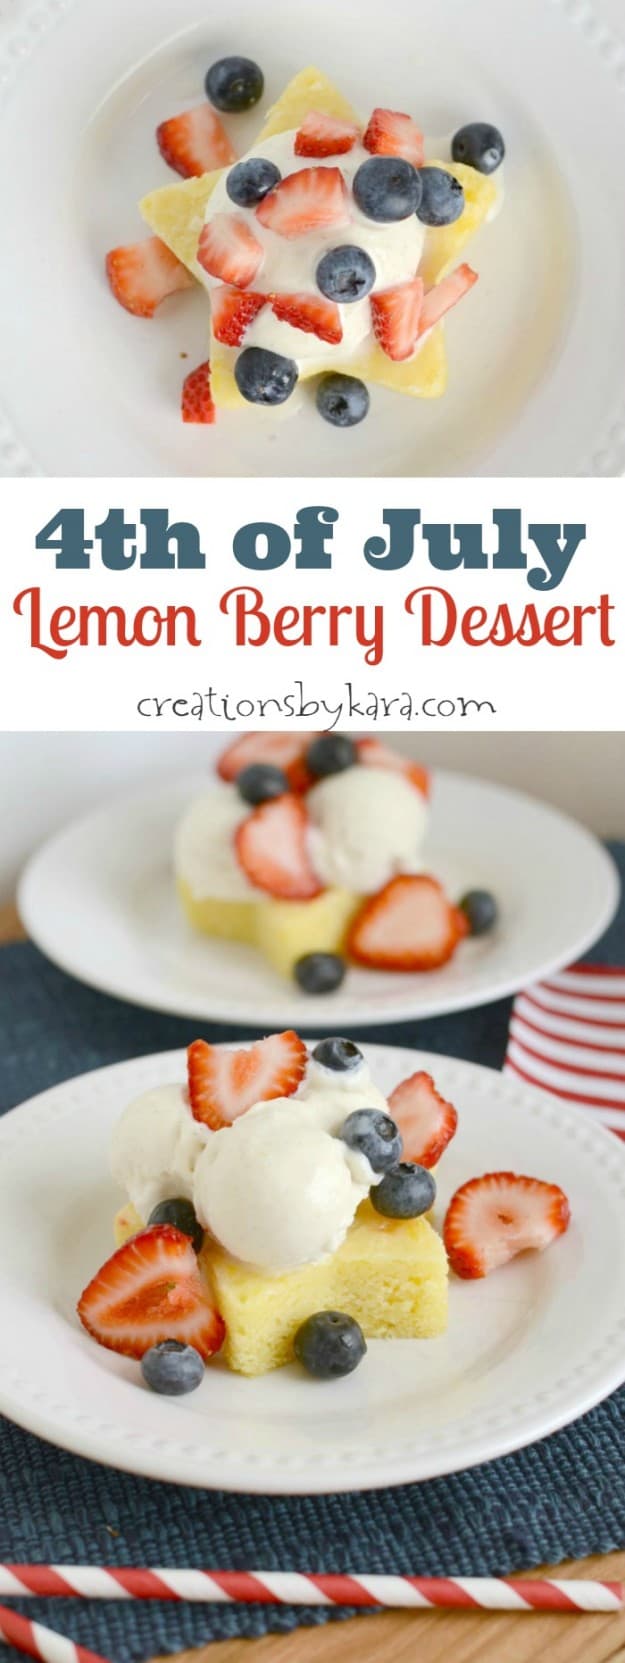 4th of july lemon berry dessert recipe collage